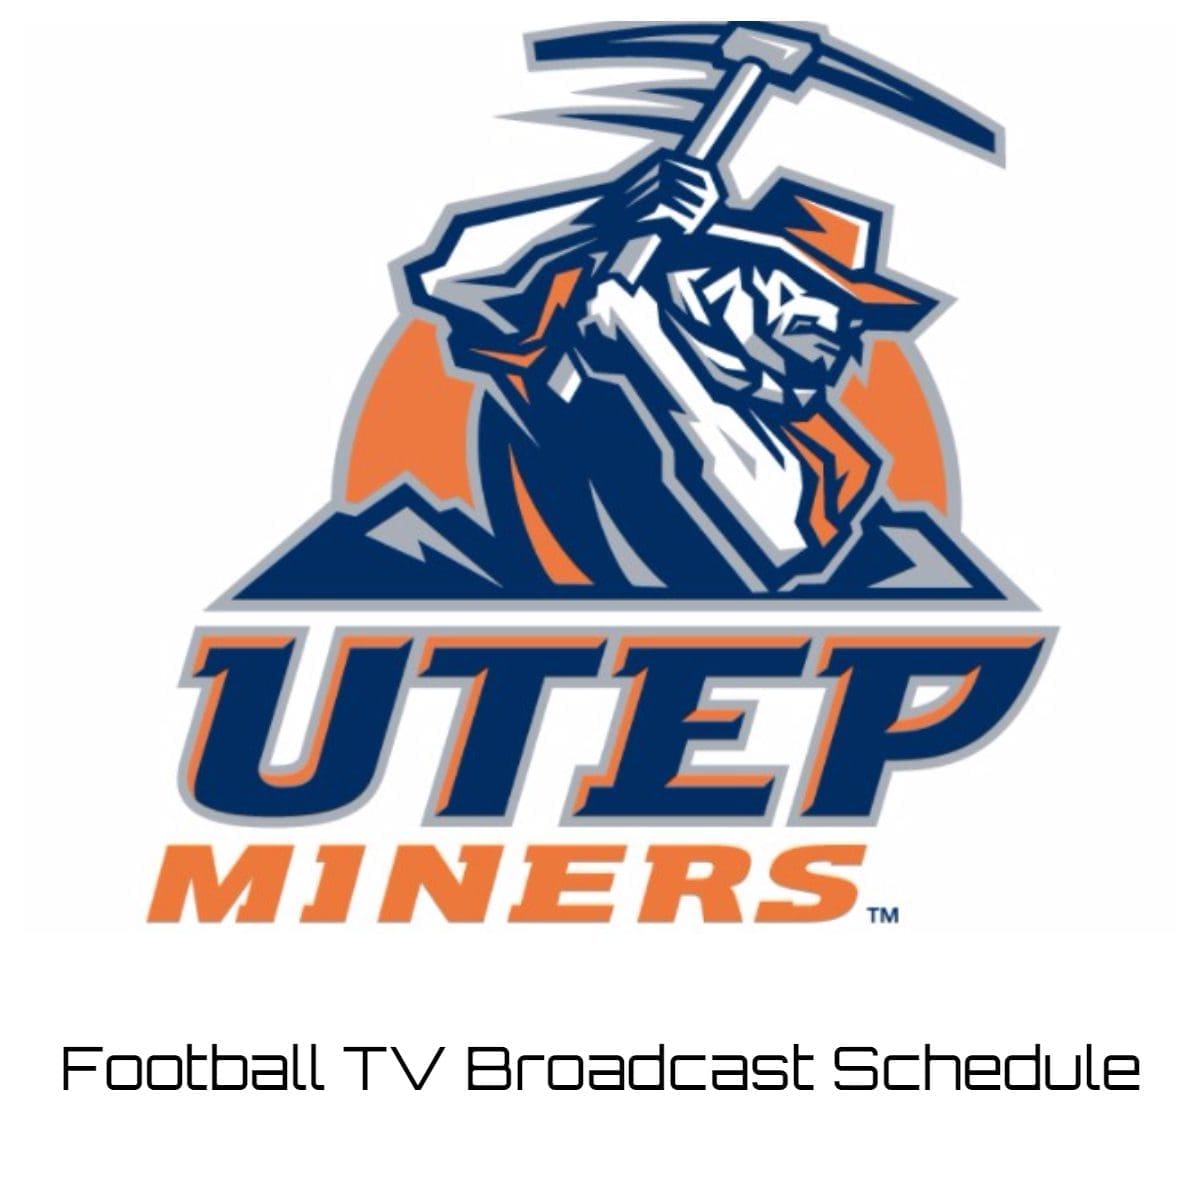 UTEP Miners Football TV Broadcast Schedule